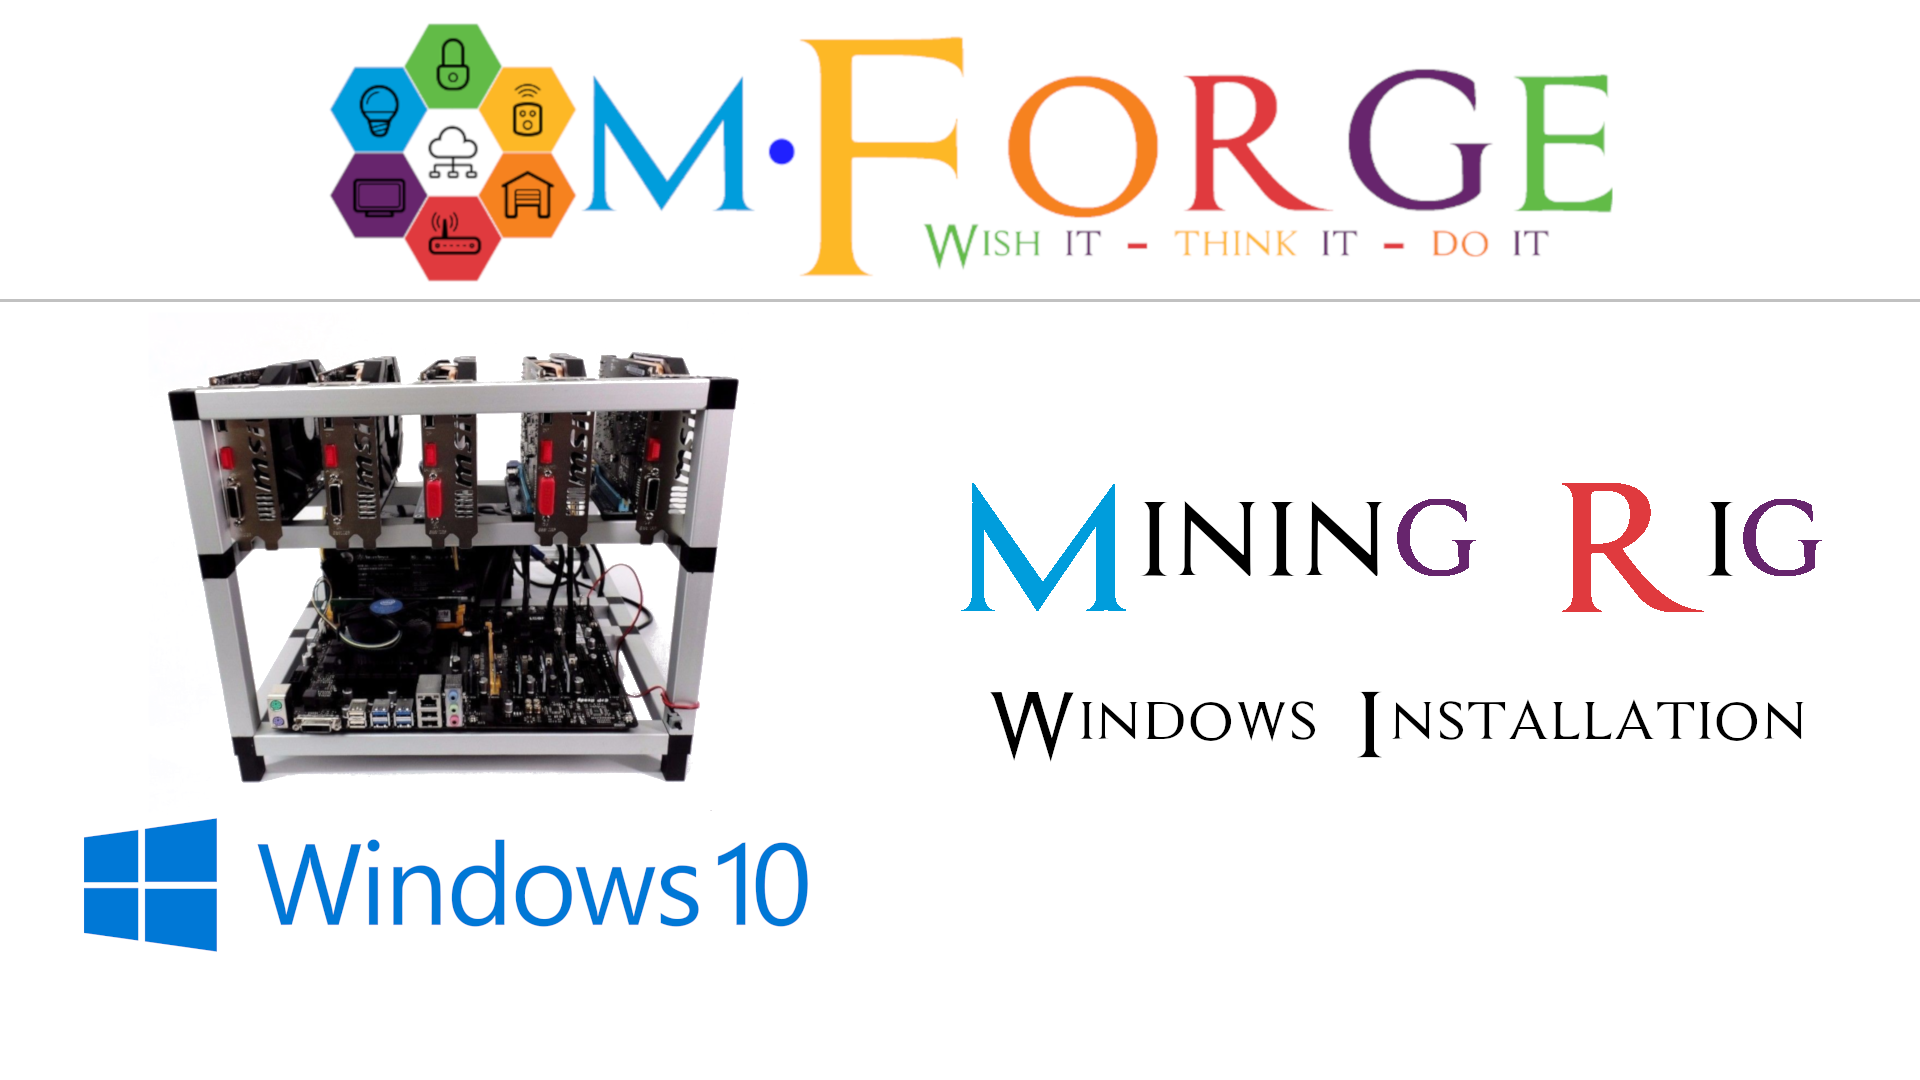 Rig – install Windows 10 – Crypto mining